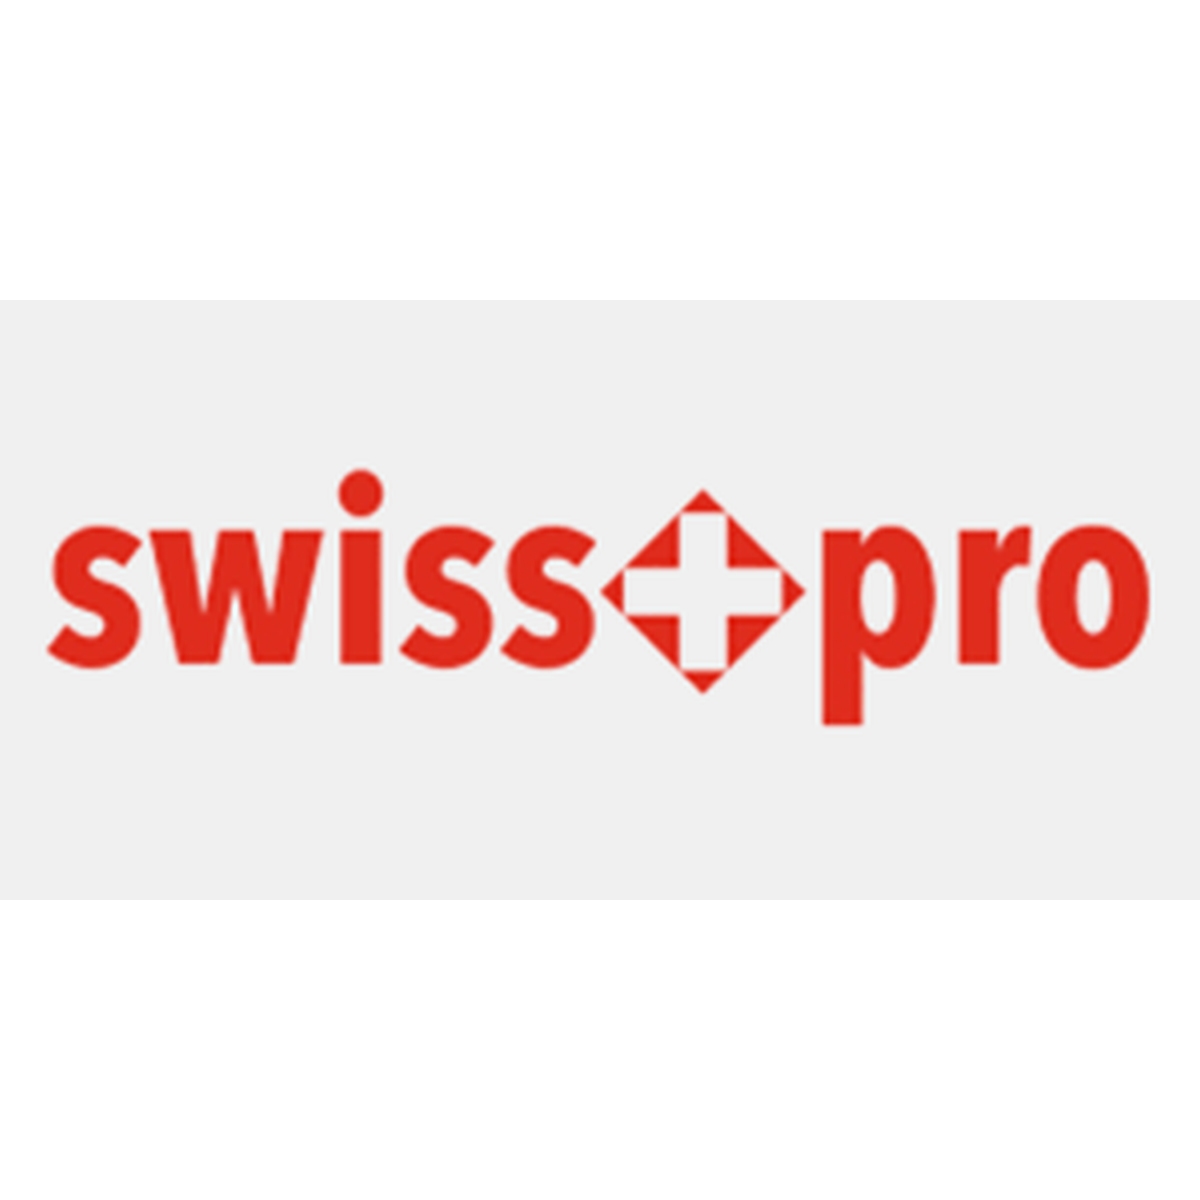 Swiss pro